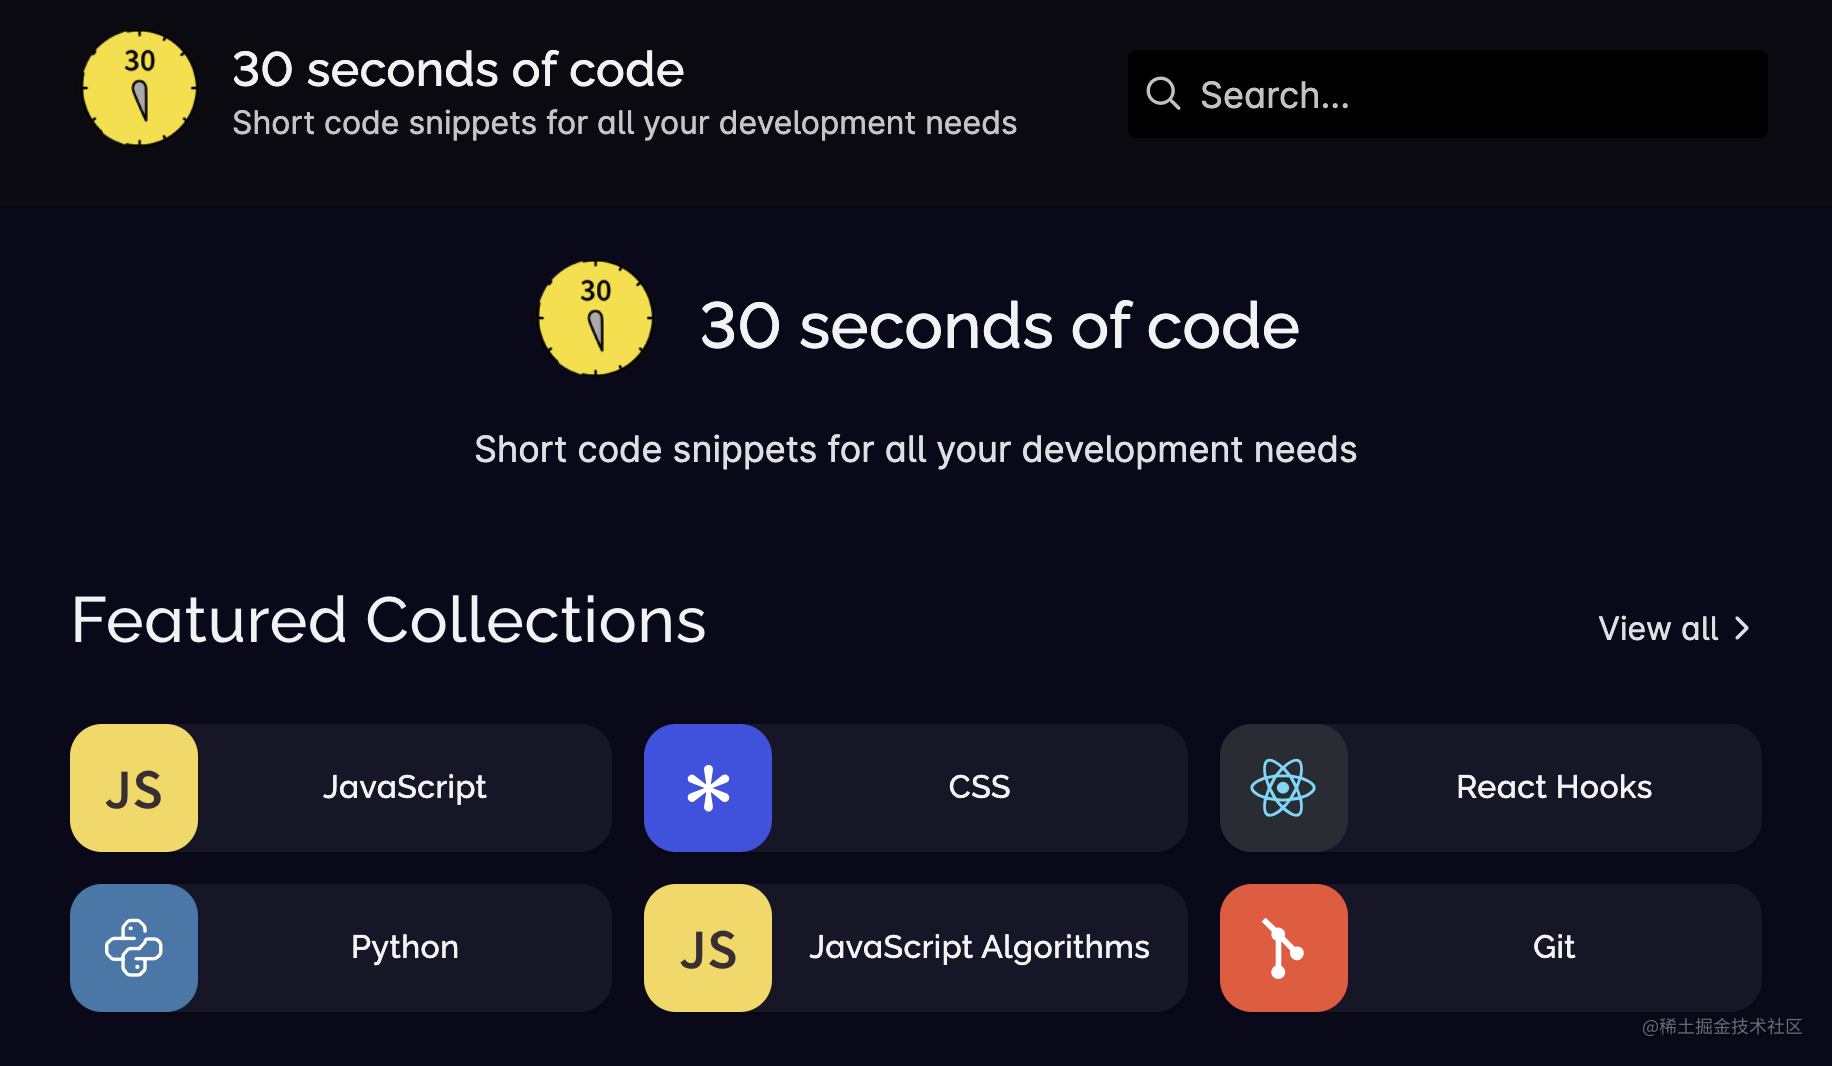 《30 seconds of code》每日解析